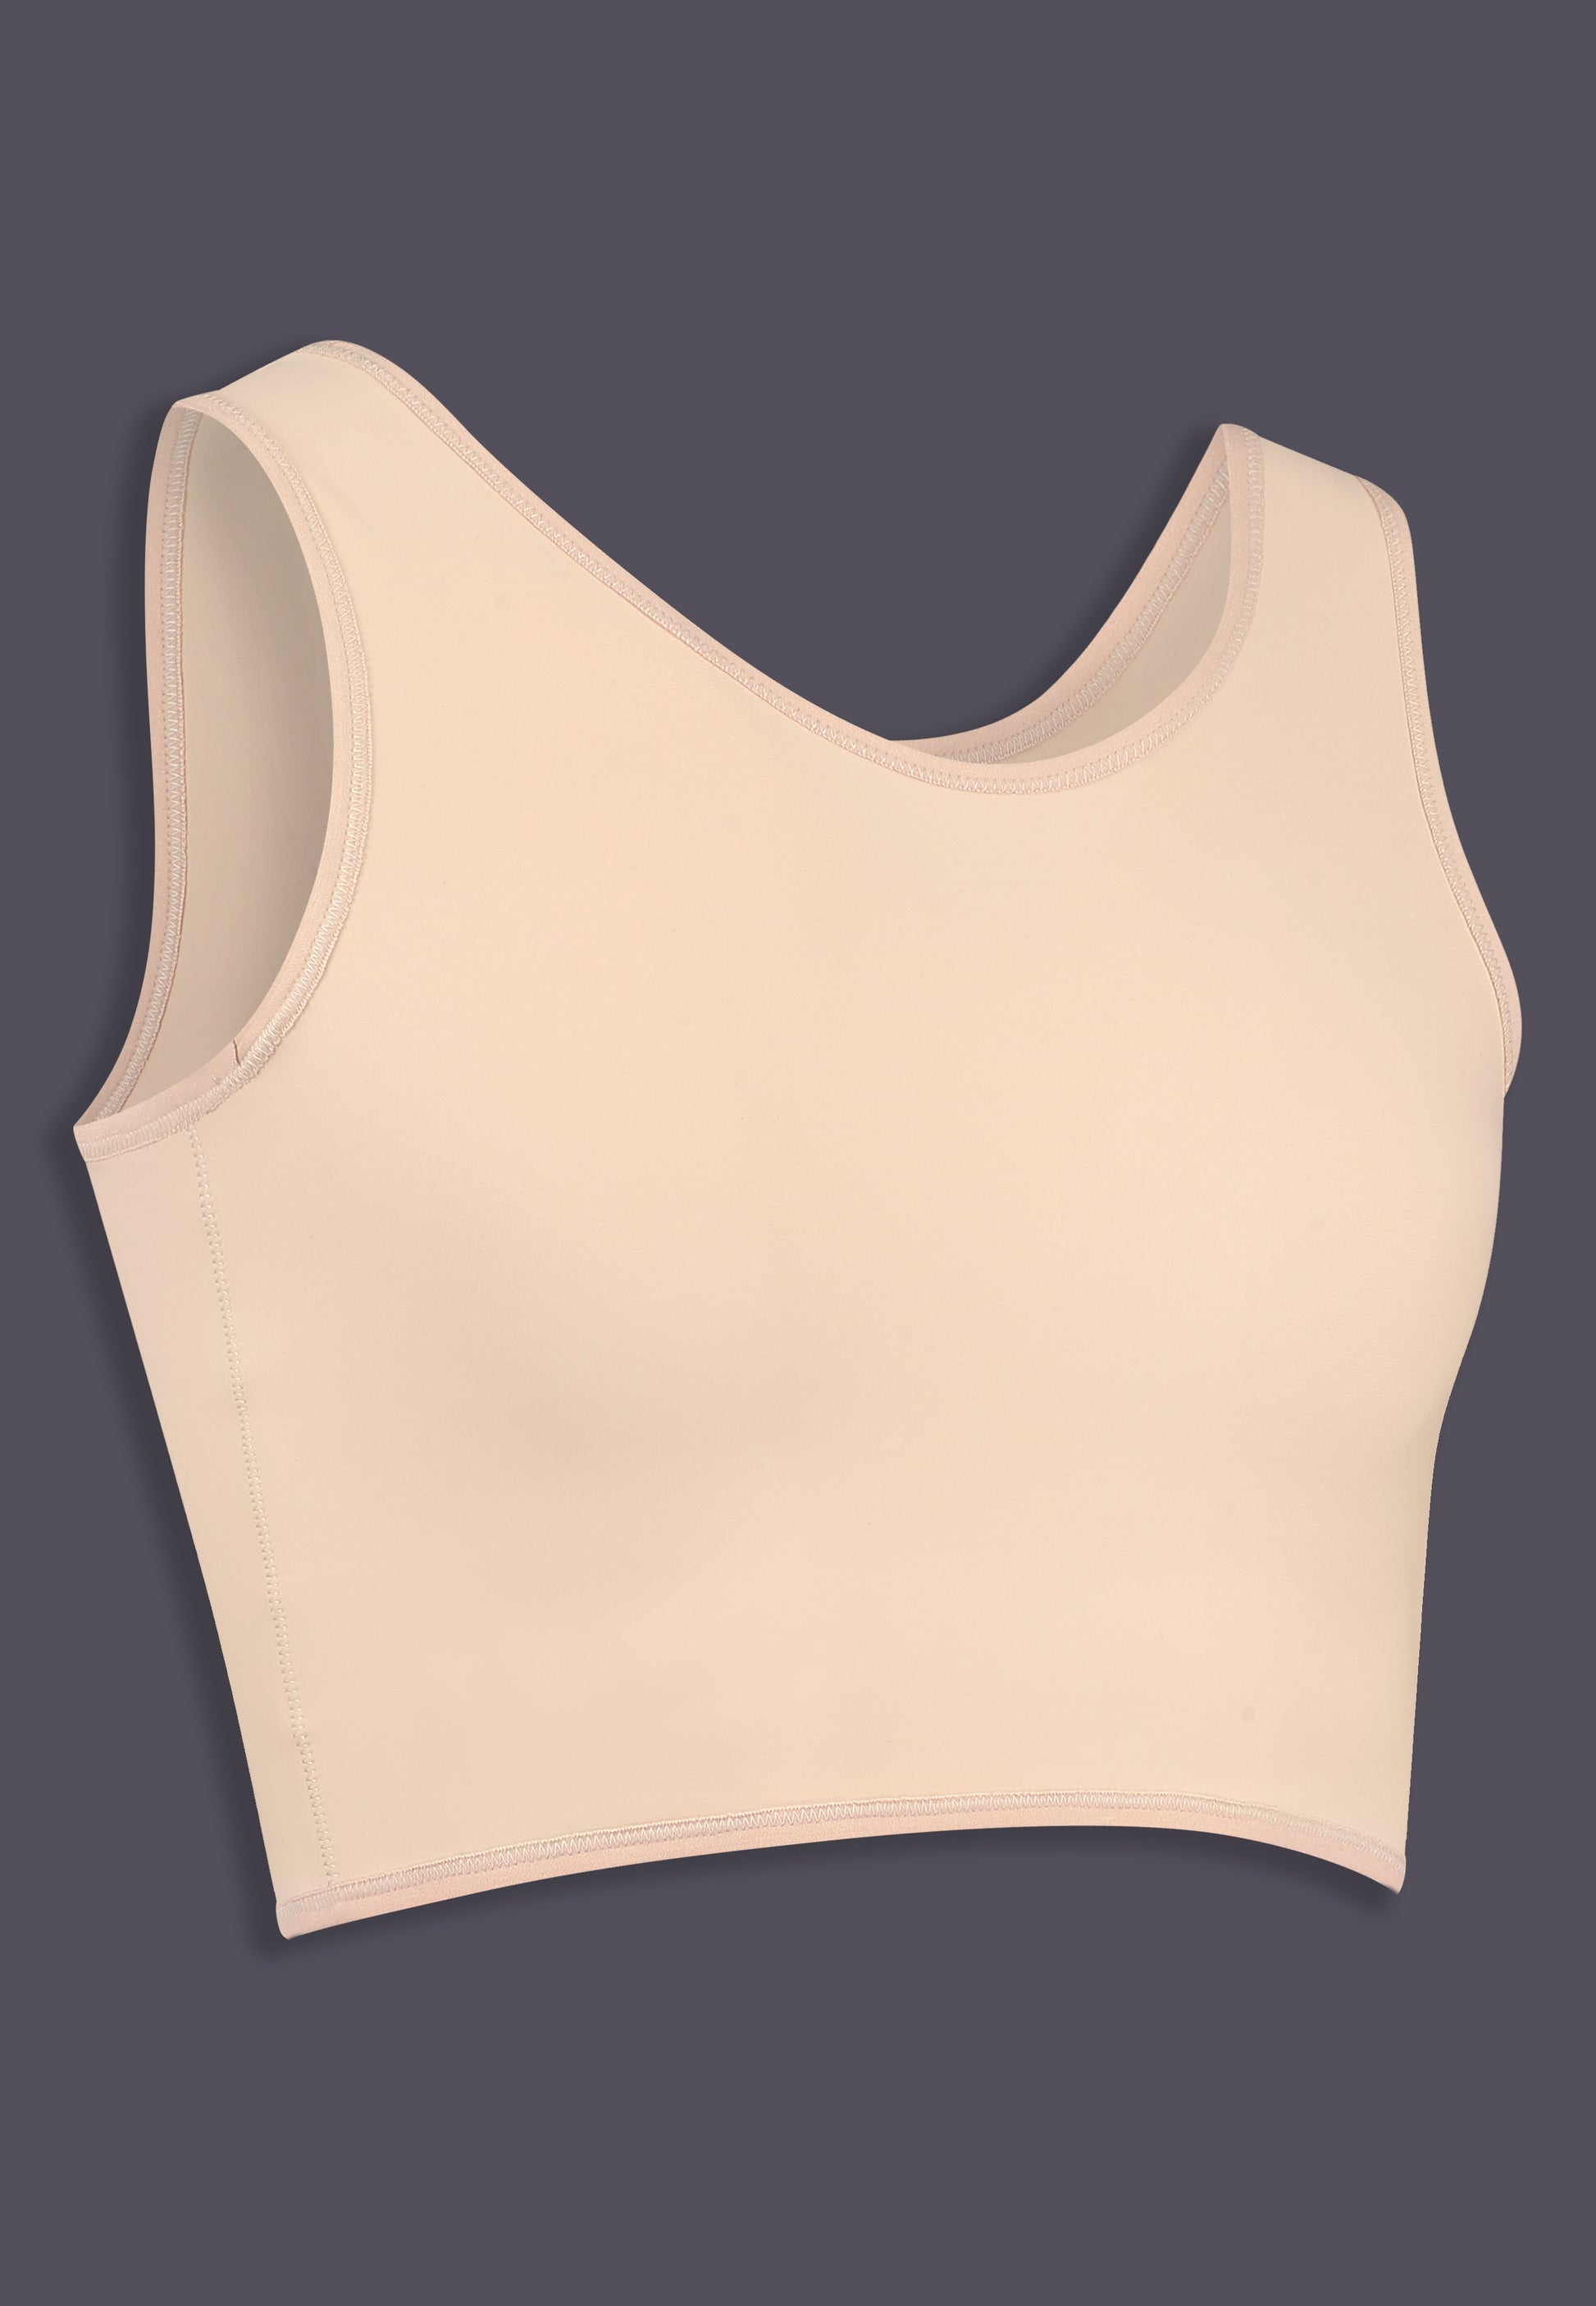 Short, beige, chest binder with a zipper